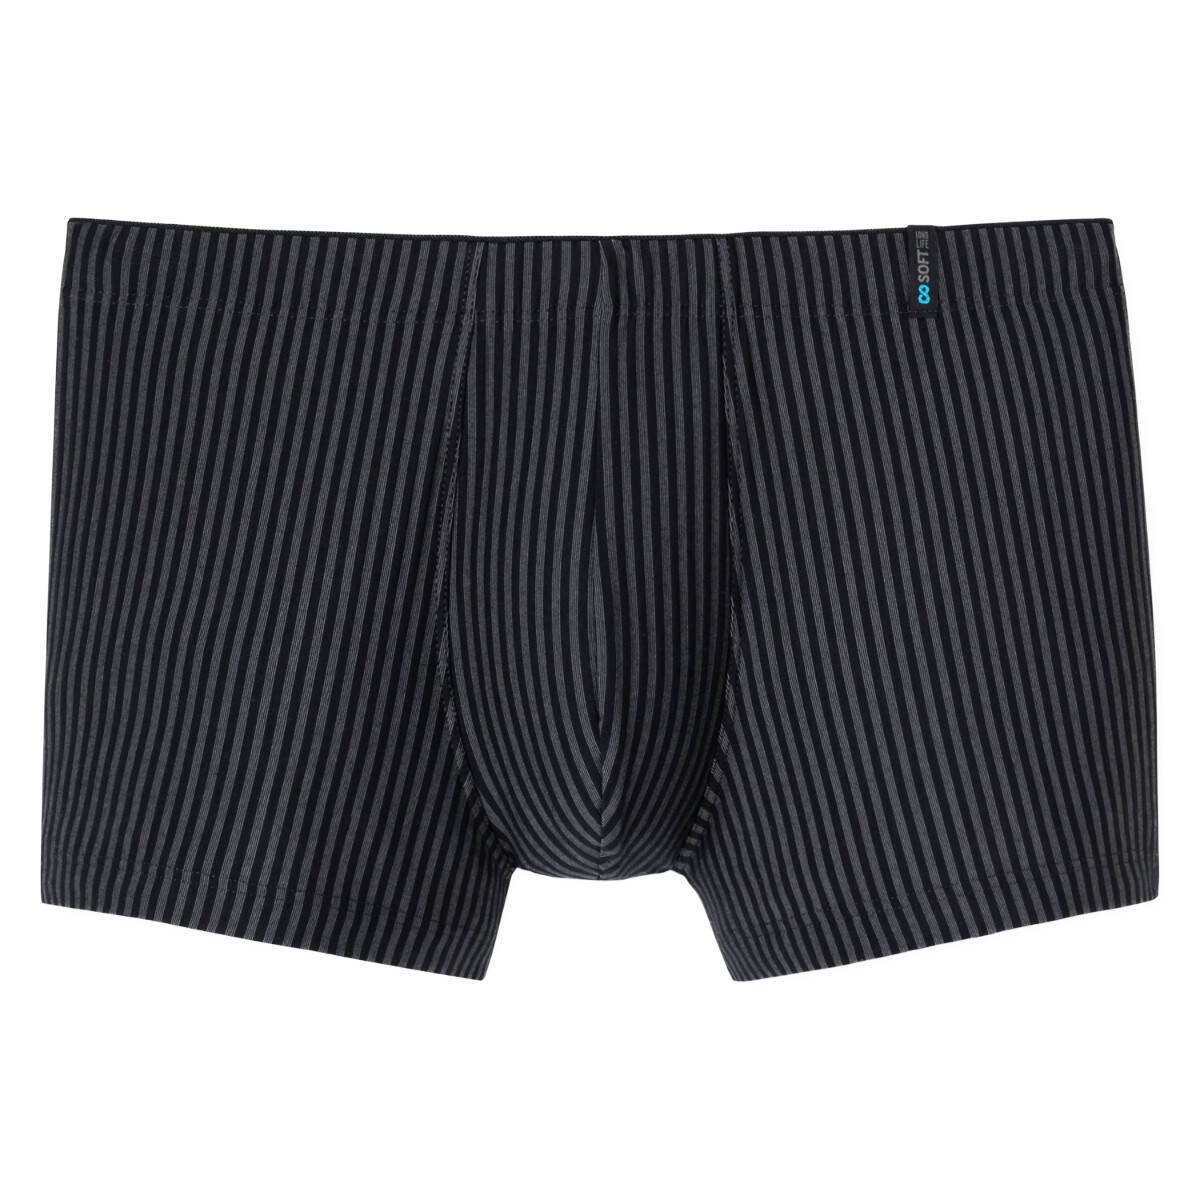 Schiesser - Long Life Soft - Shorts Pants - 149047, 27,95 €